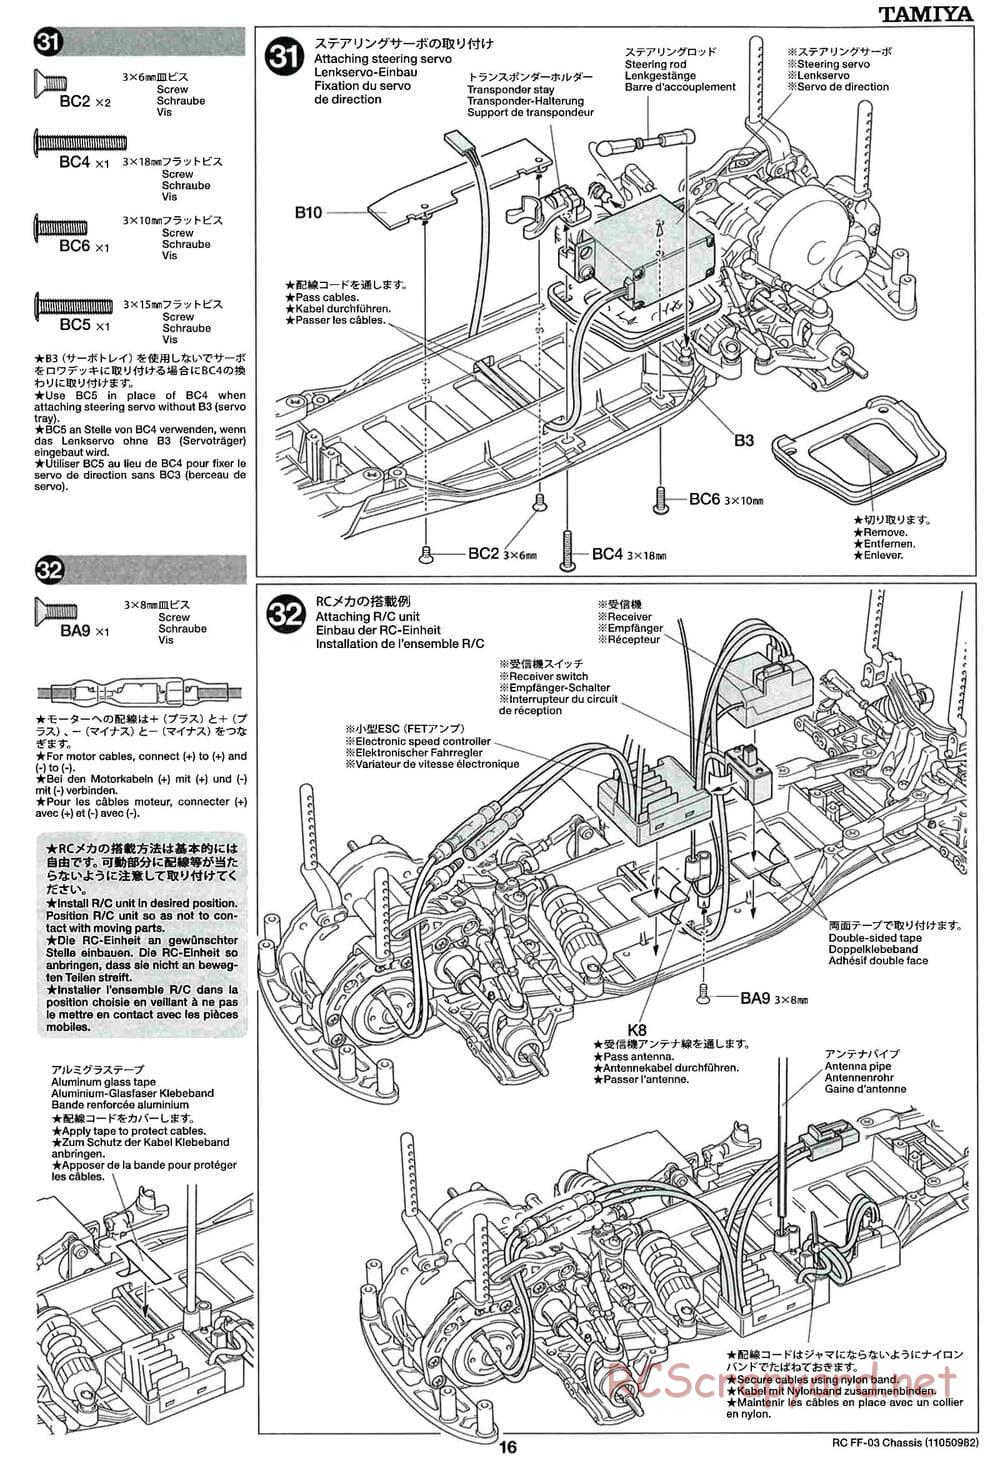 Tamiya - FF-03 Chassis - Manual - Page 16